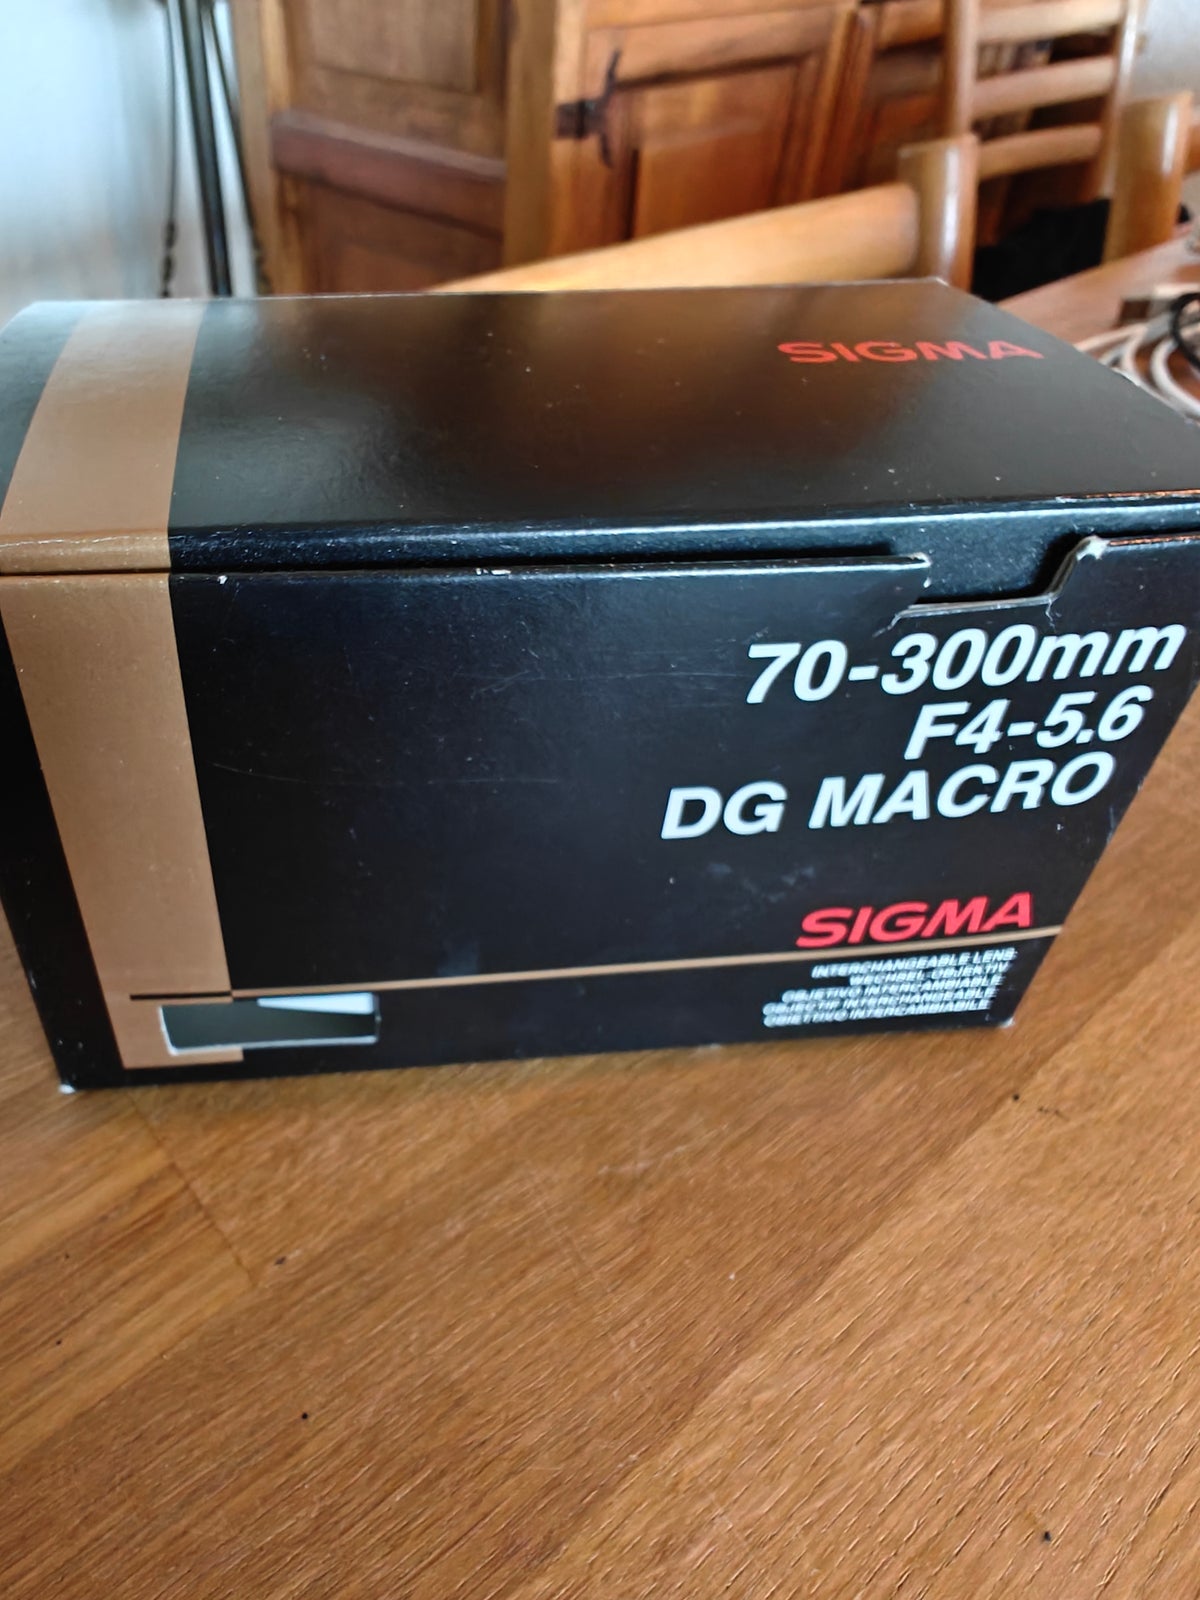 MACRO linse, Sigma, 70-300 mm F4- 5.6 DG MACRO